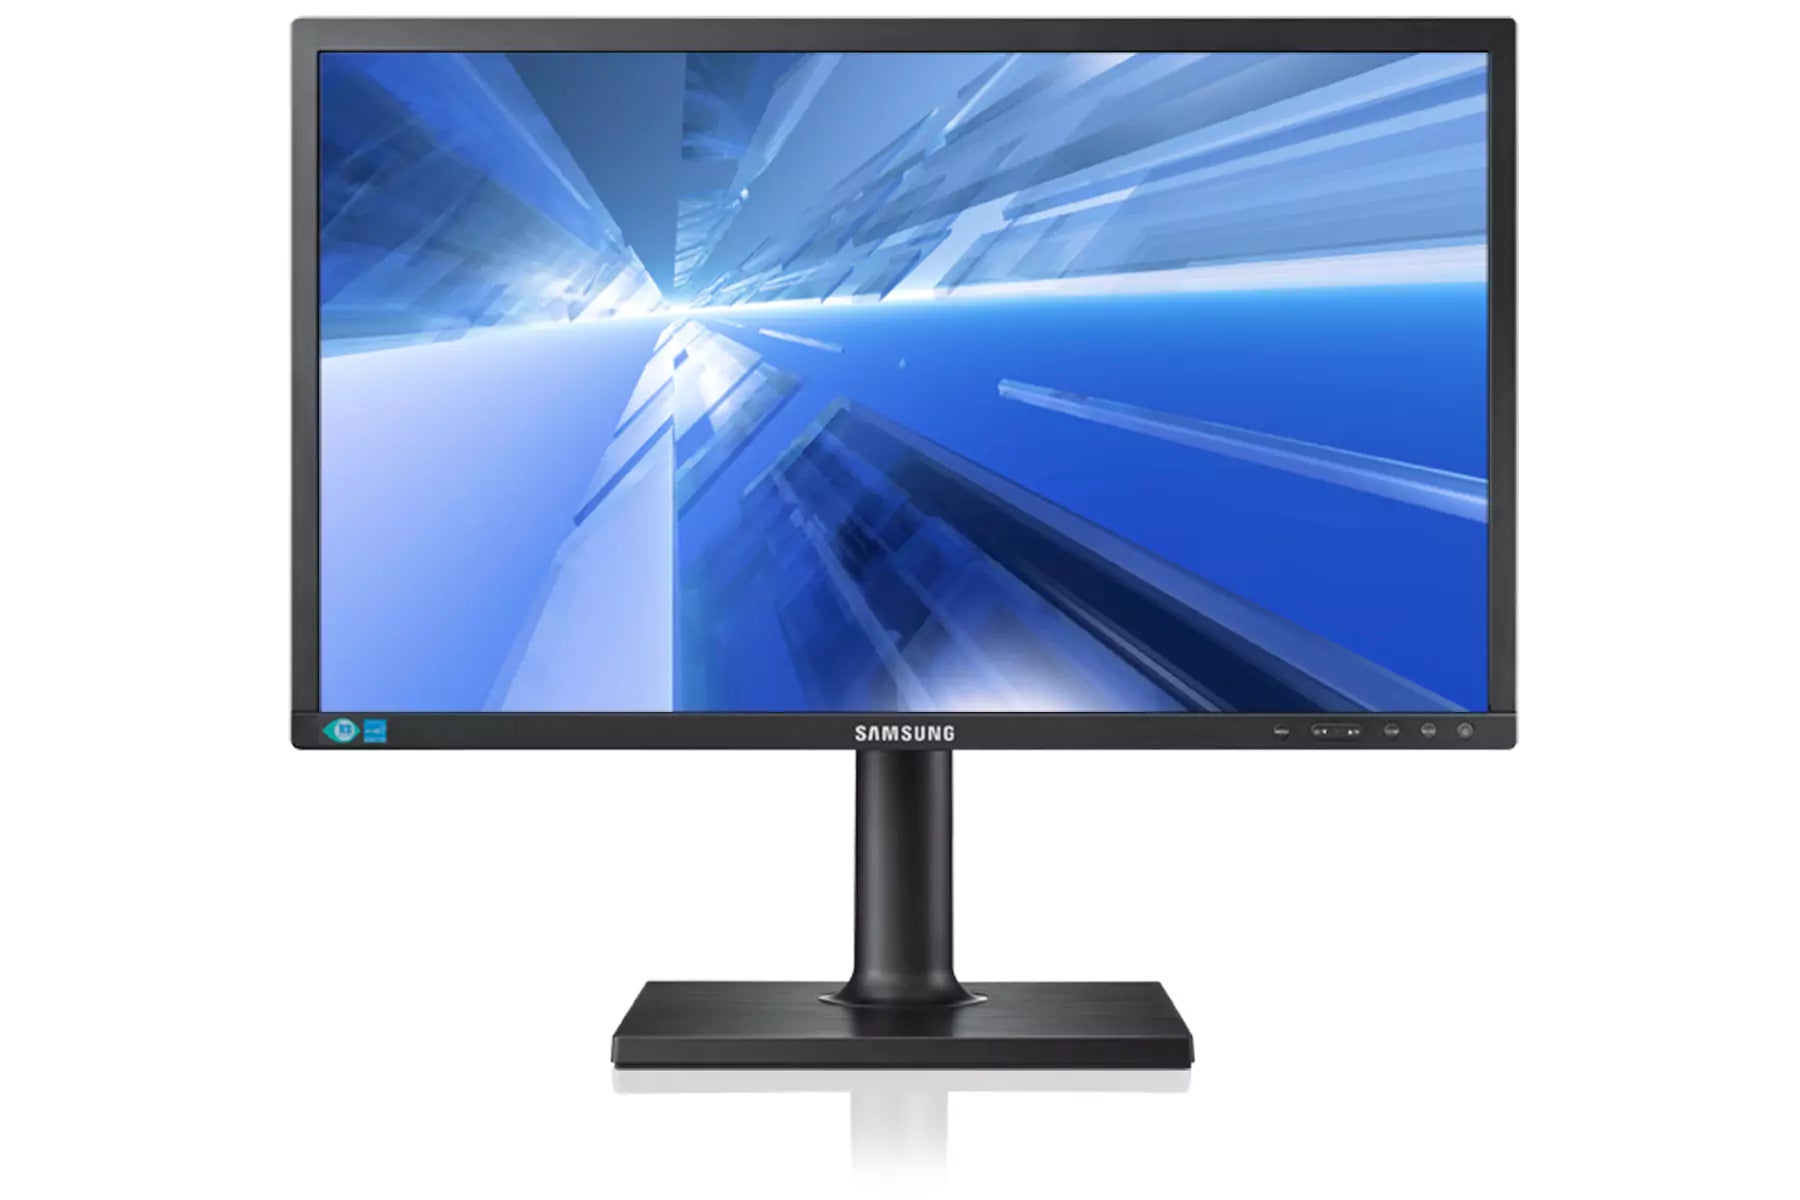 Samsung S22D300 TN LCD Monitor 22″ Inch 1680×1050 Pixel HD Contrast 1000:1 Brightness 250 cd/m² Response time 5ms VGA